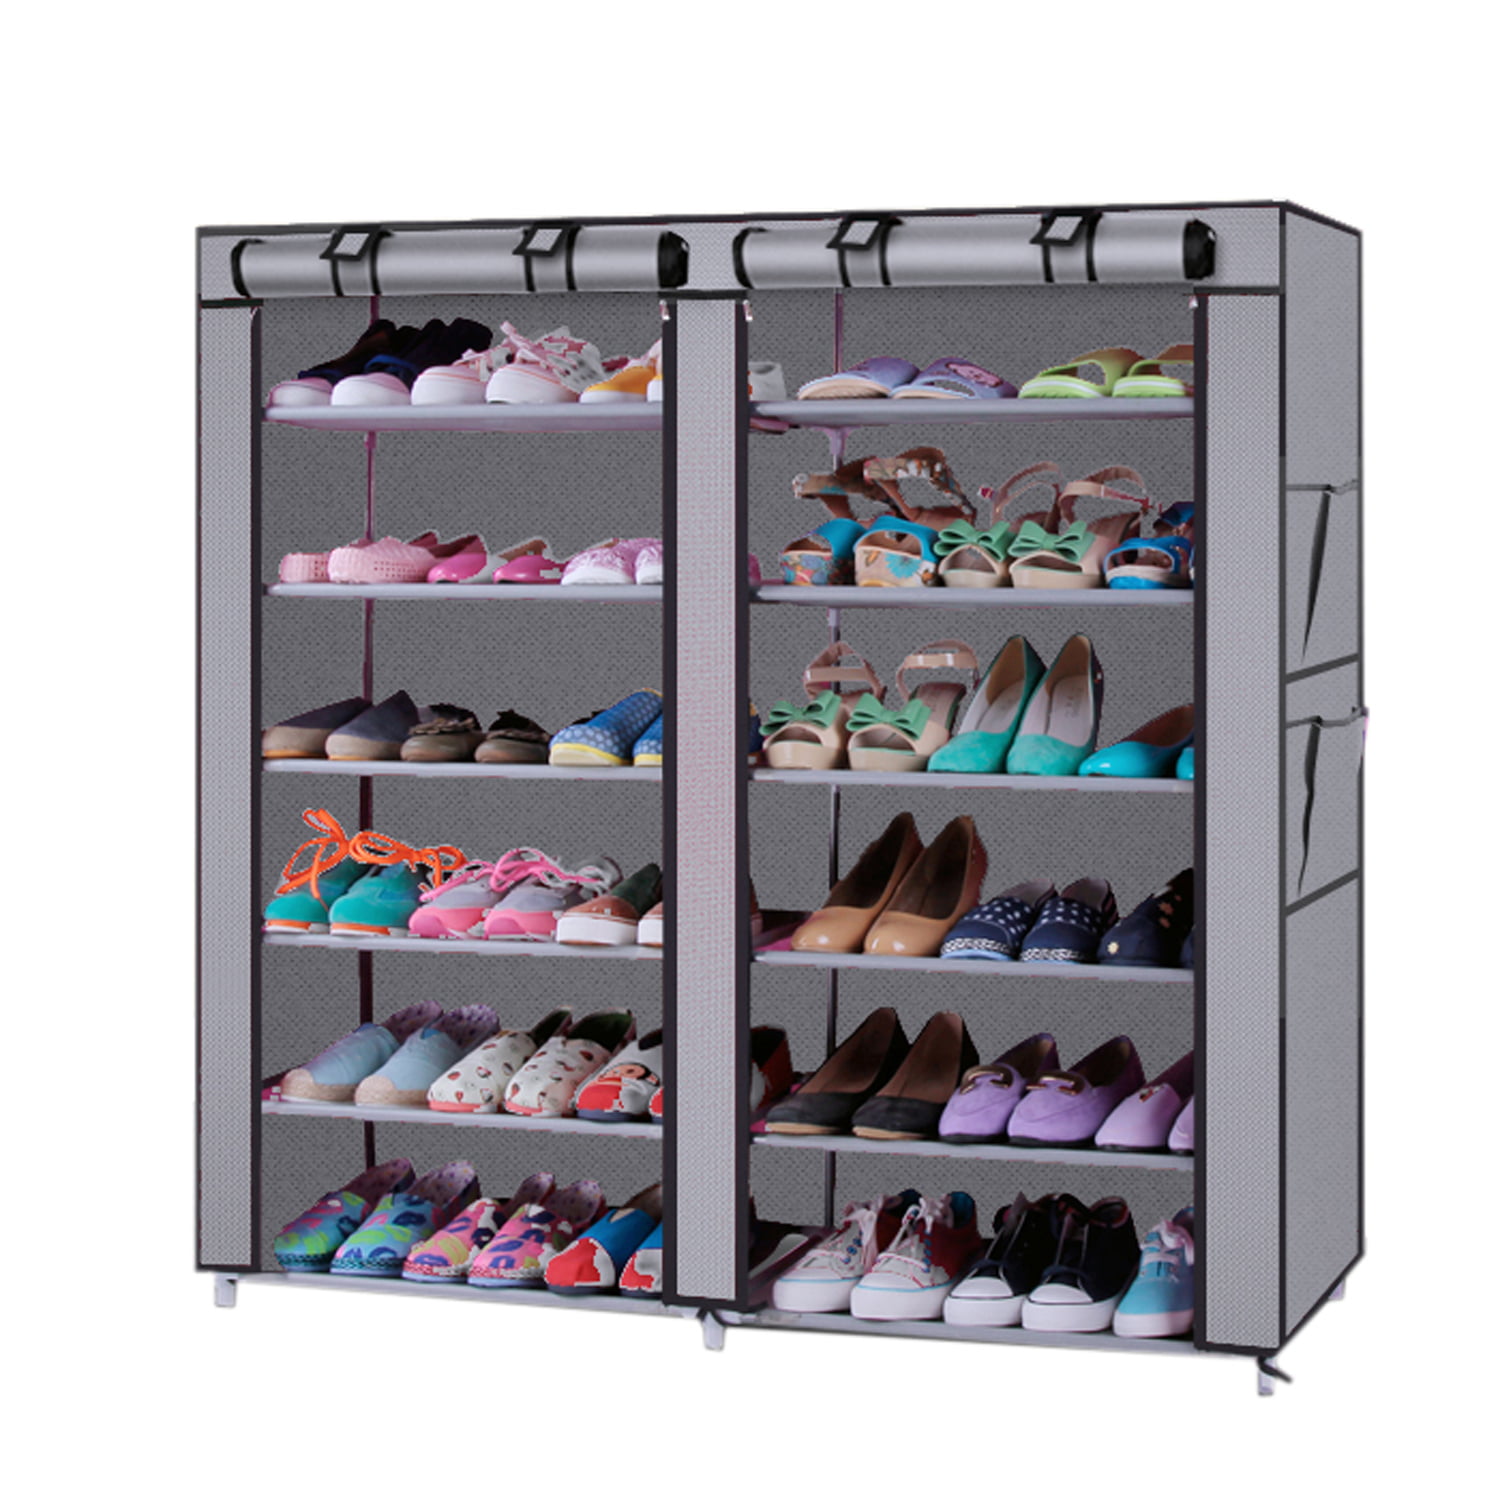 JIUYOTREE 7-Tier Shoe Rack with Dustproof Cover Shoe Storage